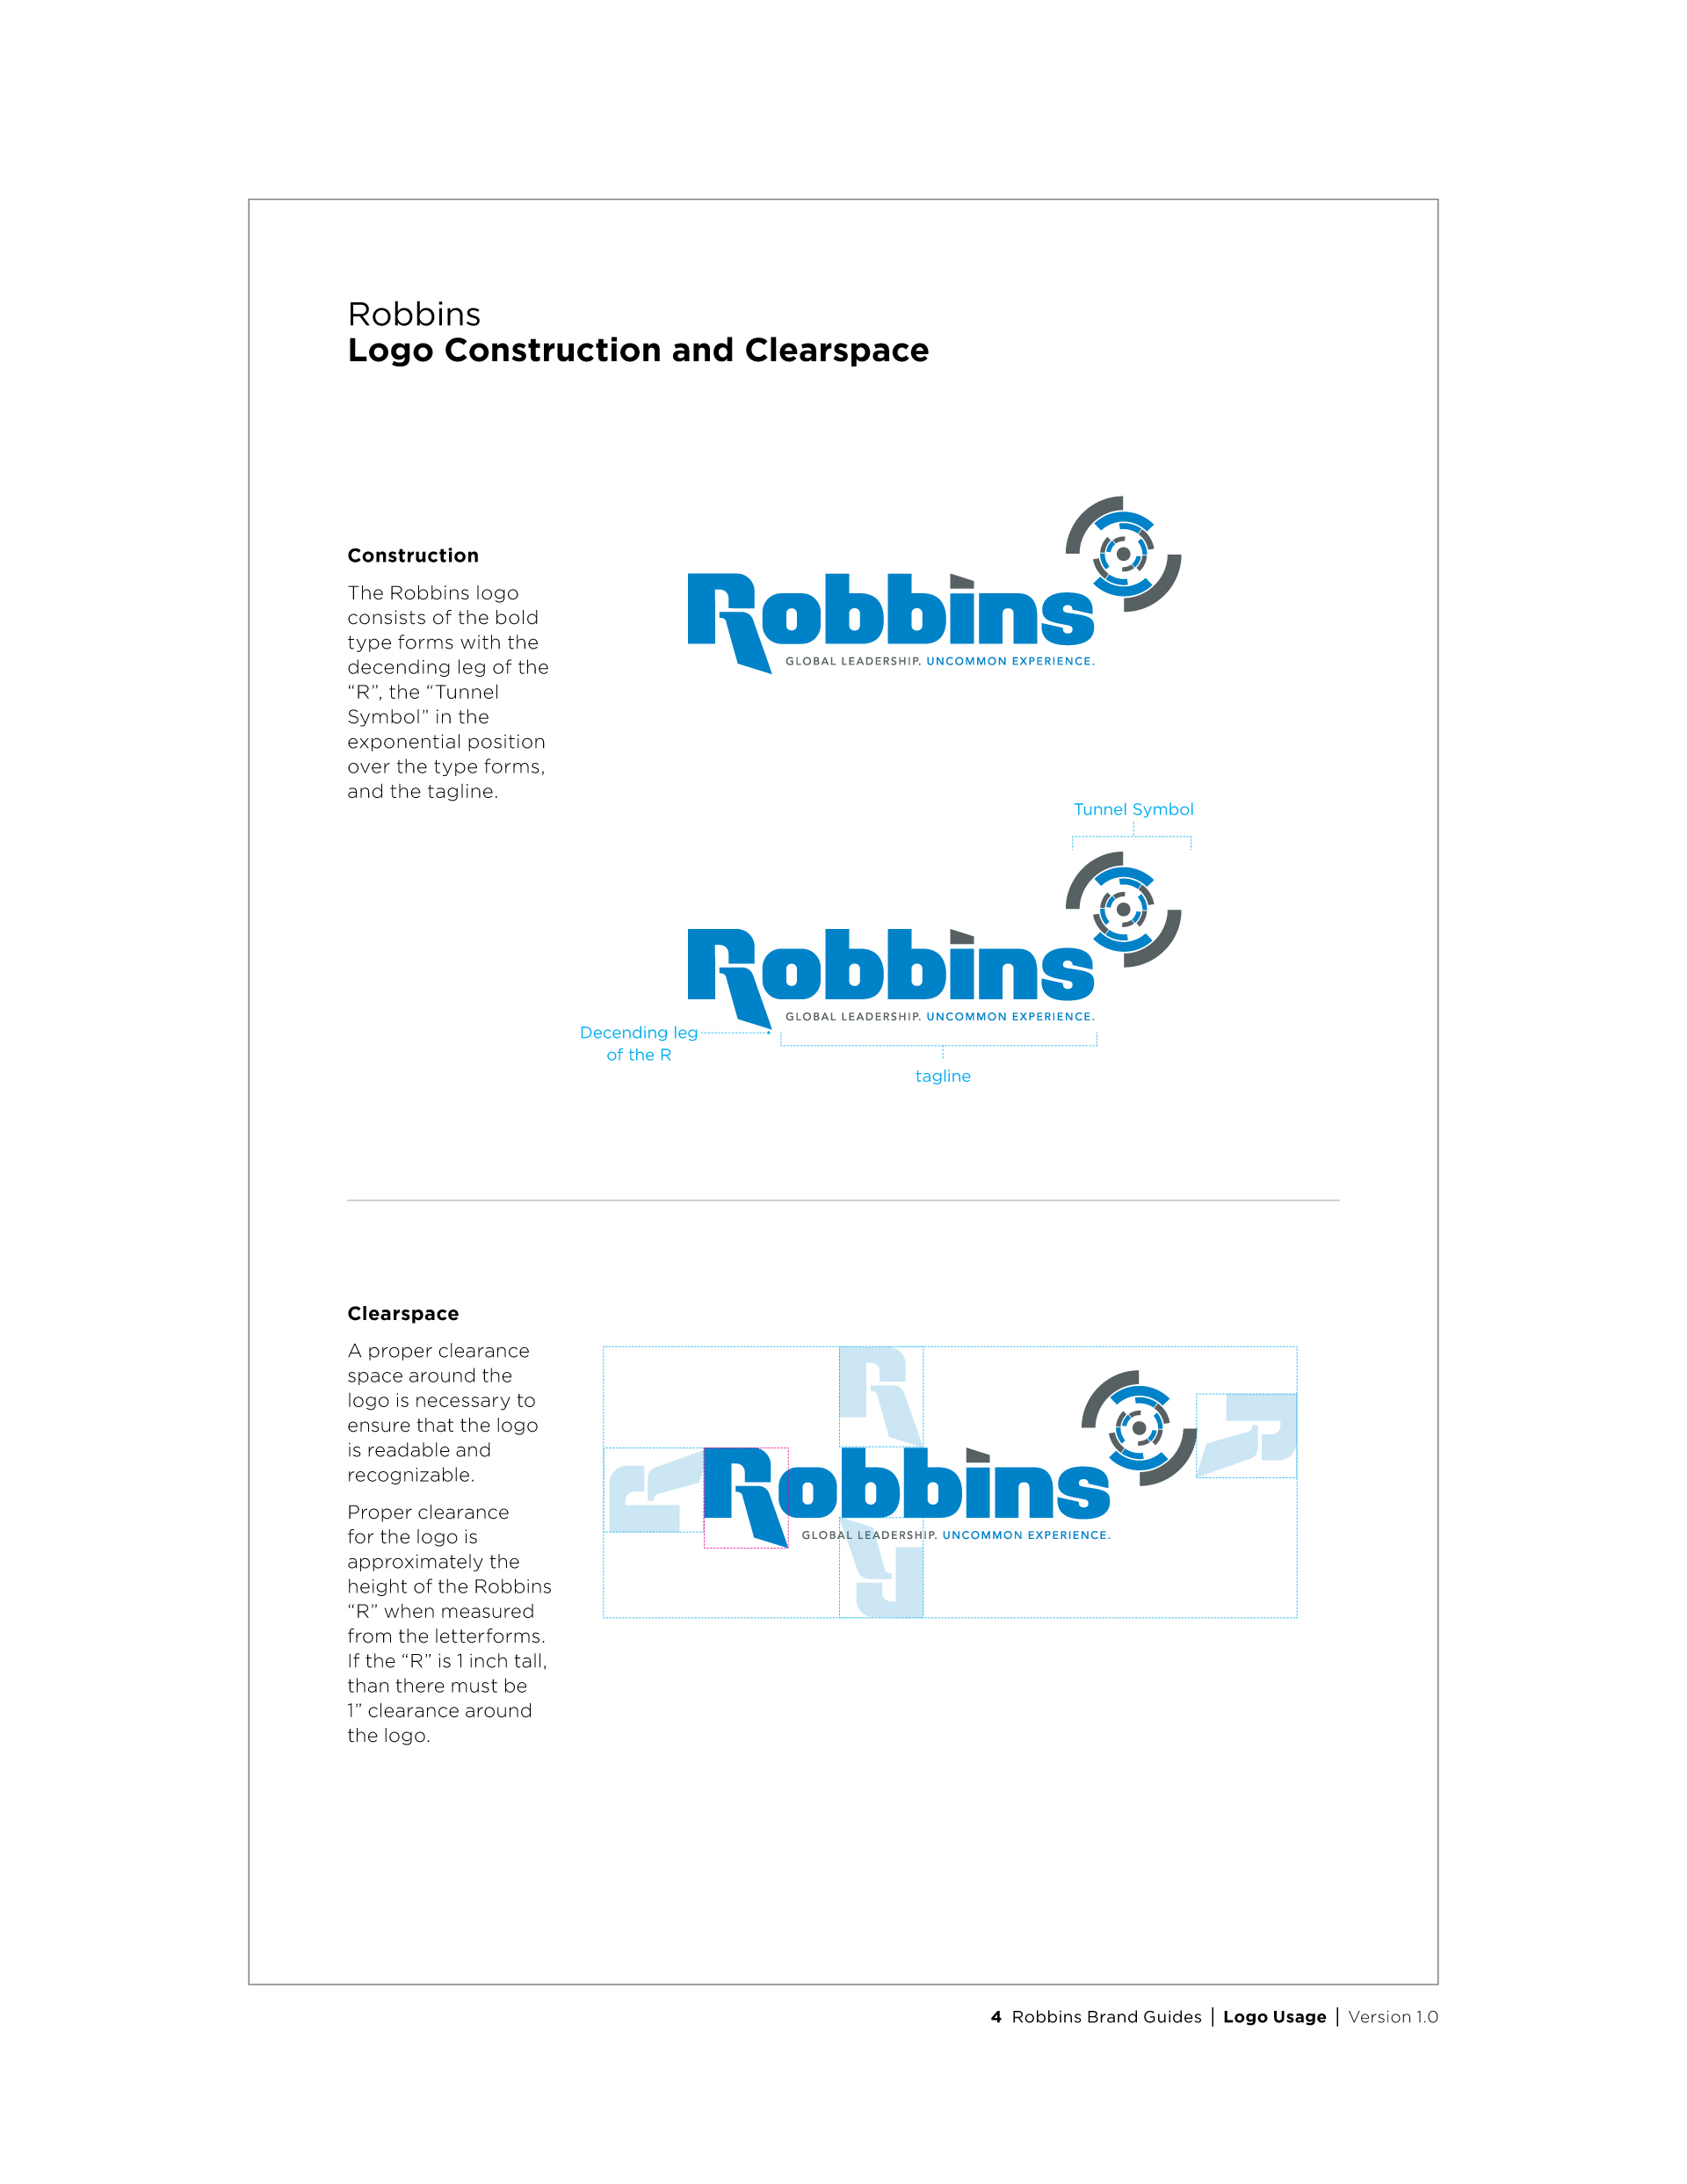 robbins_guide_2